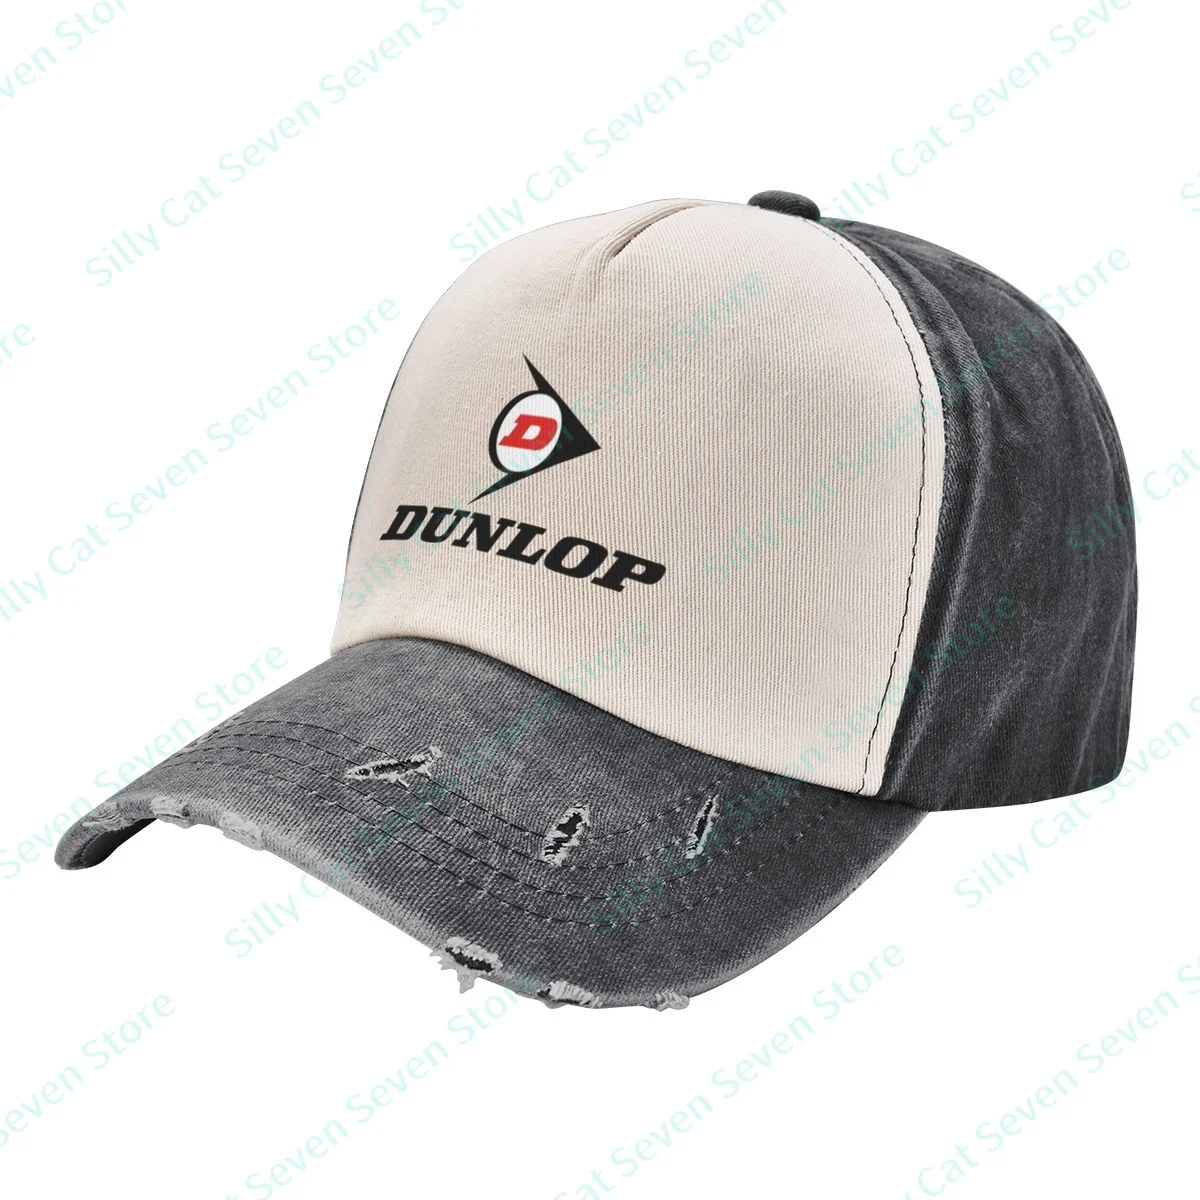 

Fashion Dunlops cowboy Baseball Cap Men Women Vintage adjustable Mixed color stitching Baseball Cap Washed Dad Hat